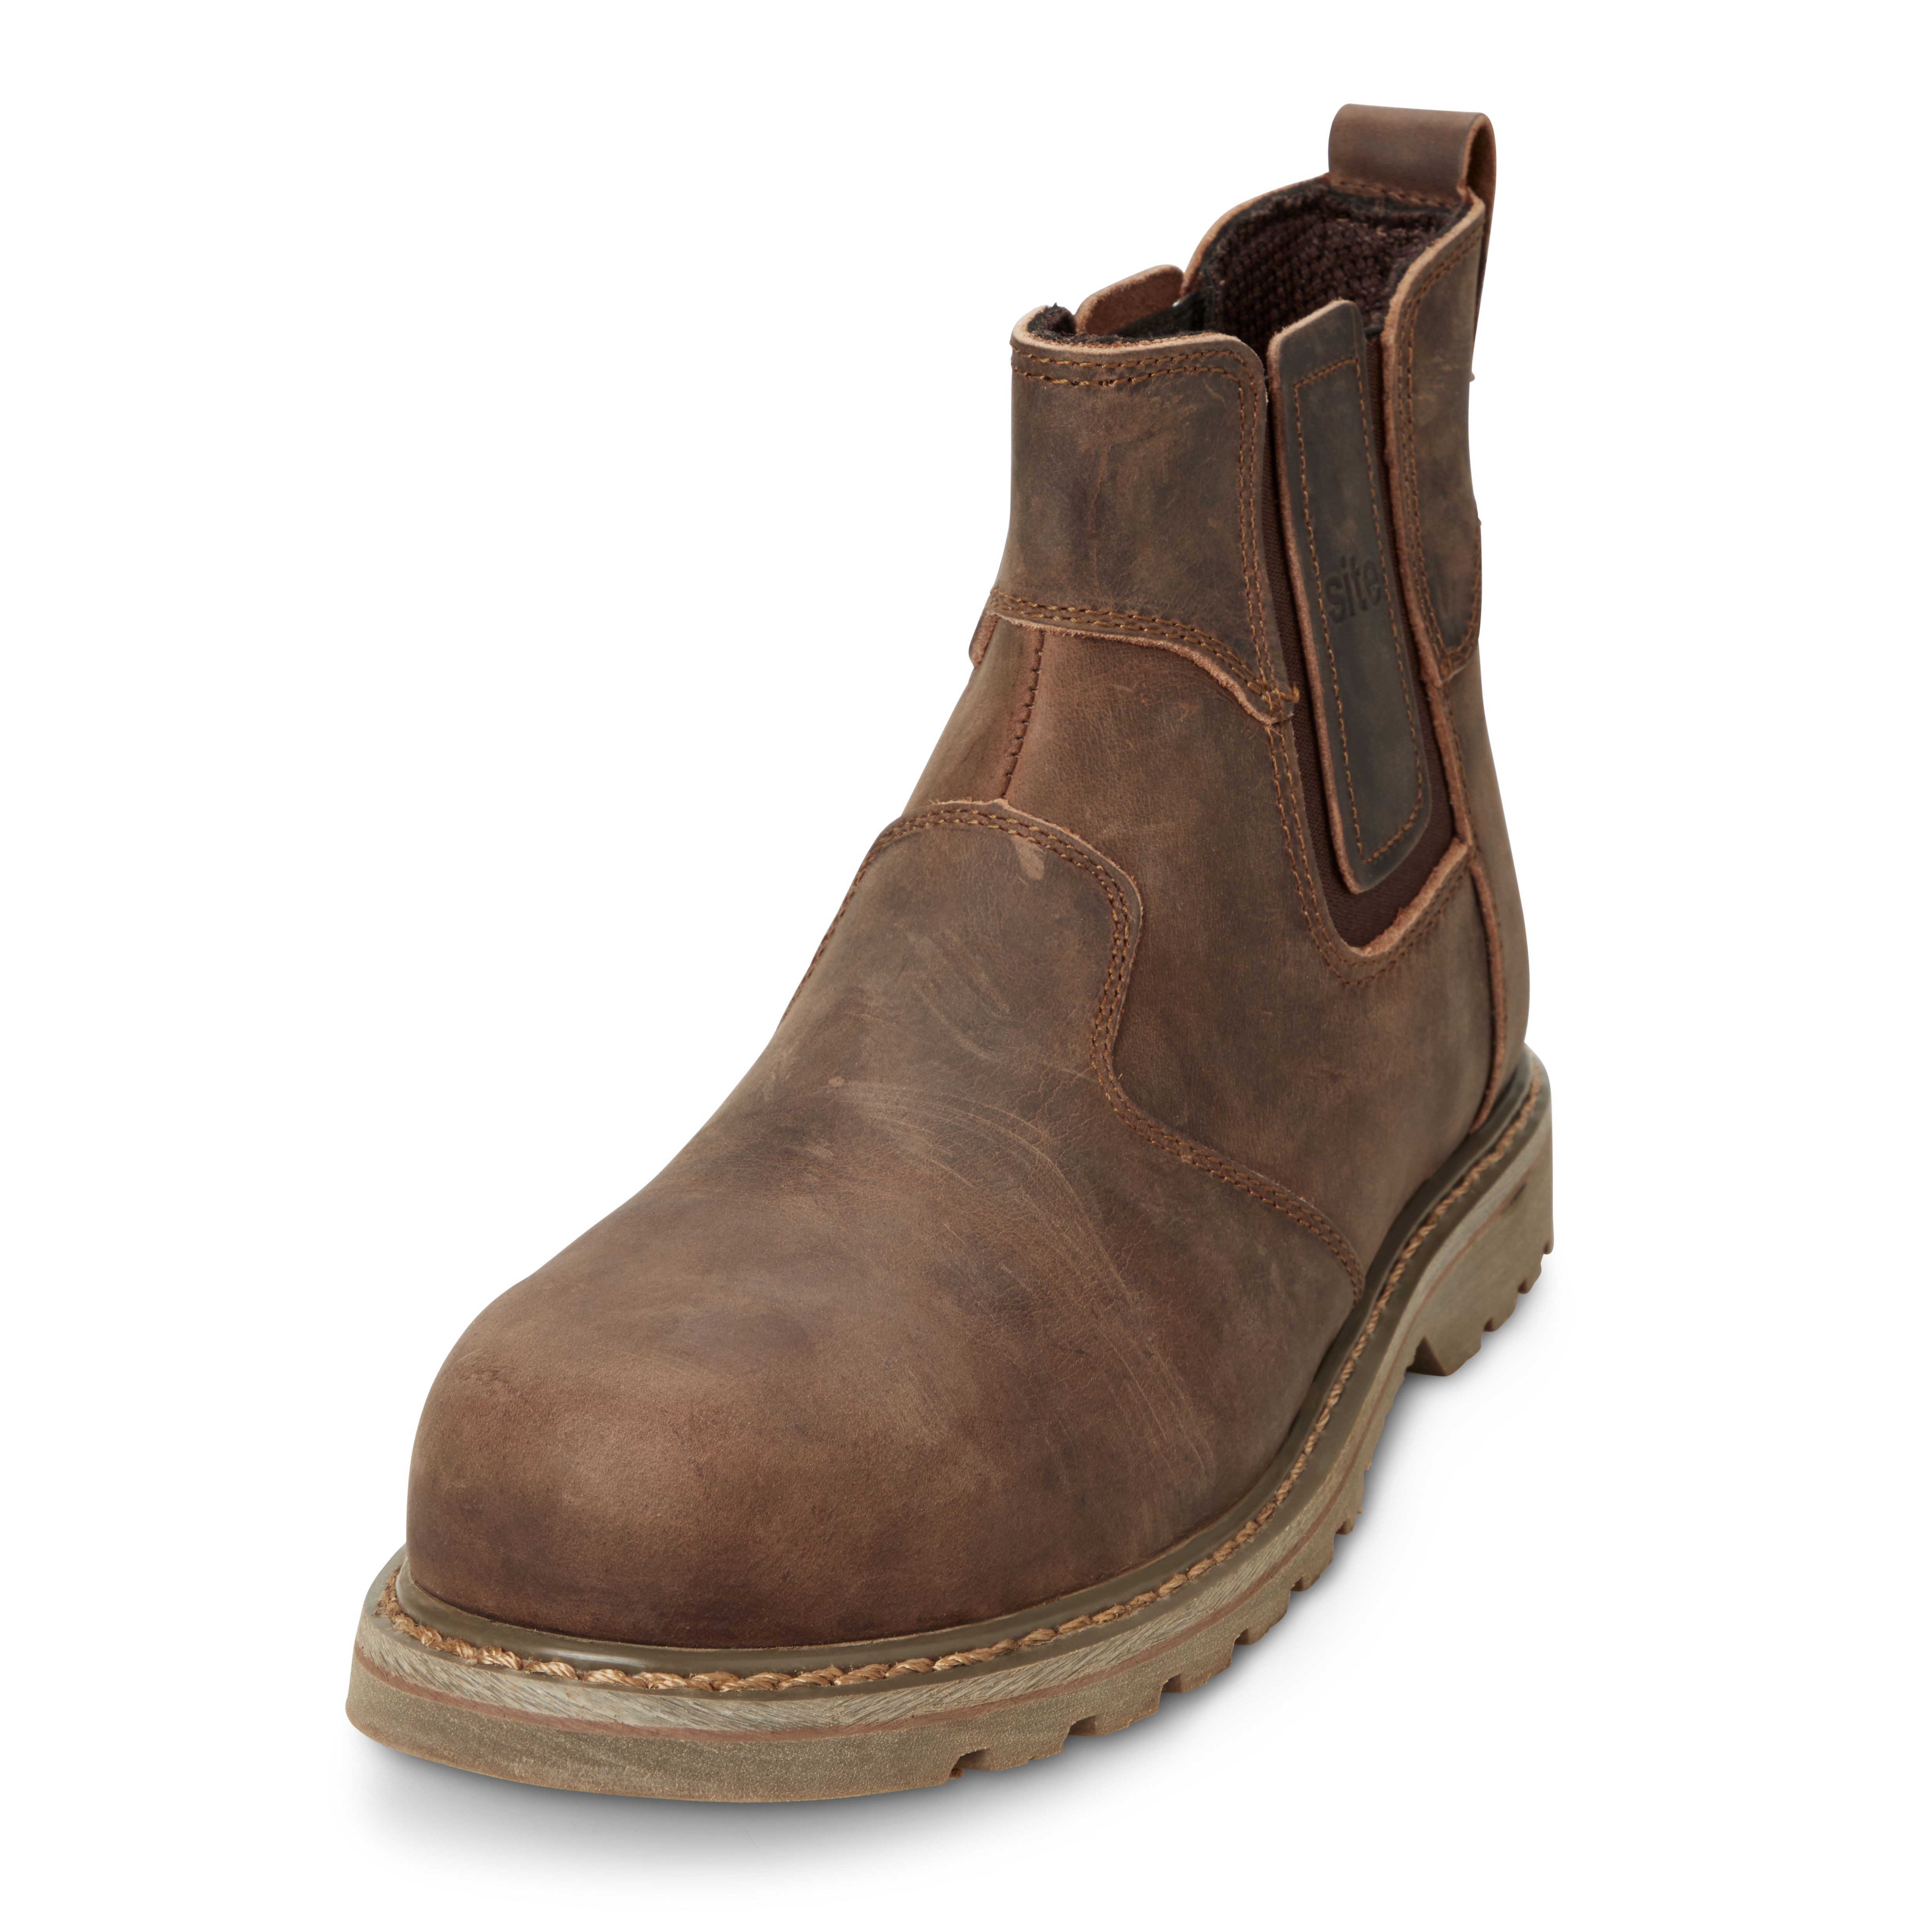 Site Brown Mudguard Dealer boots, Size 9 | Departments | DIY at B&Q